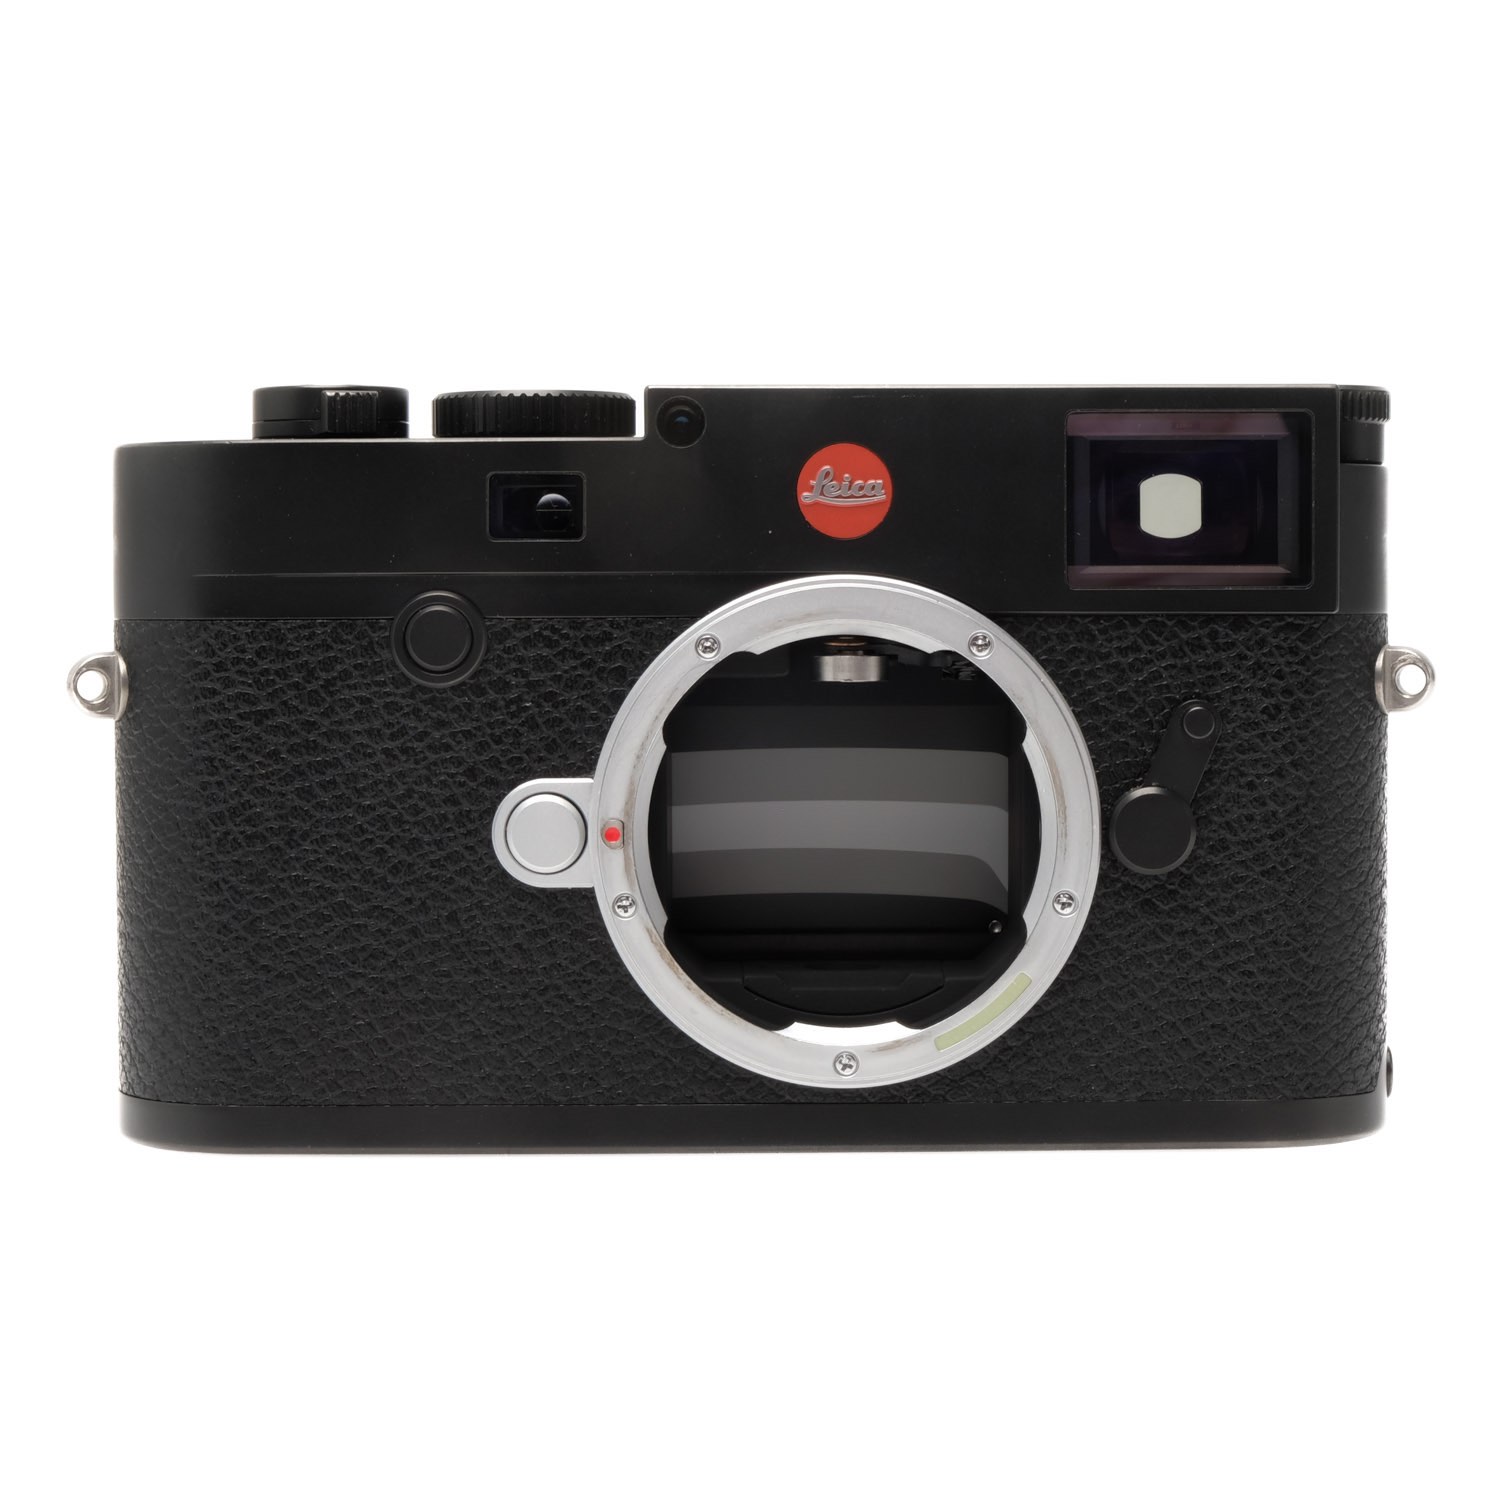 Leica M10 Black, Boxed 5182054